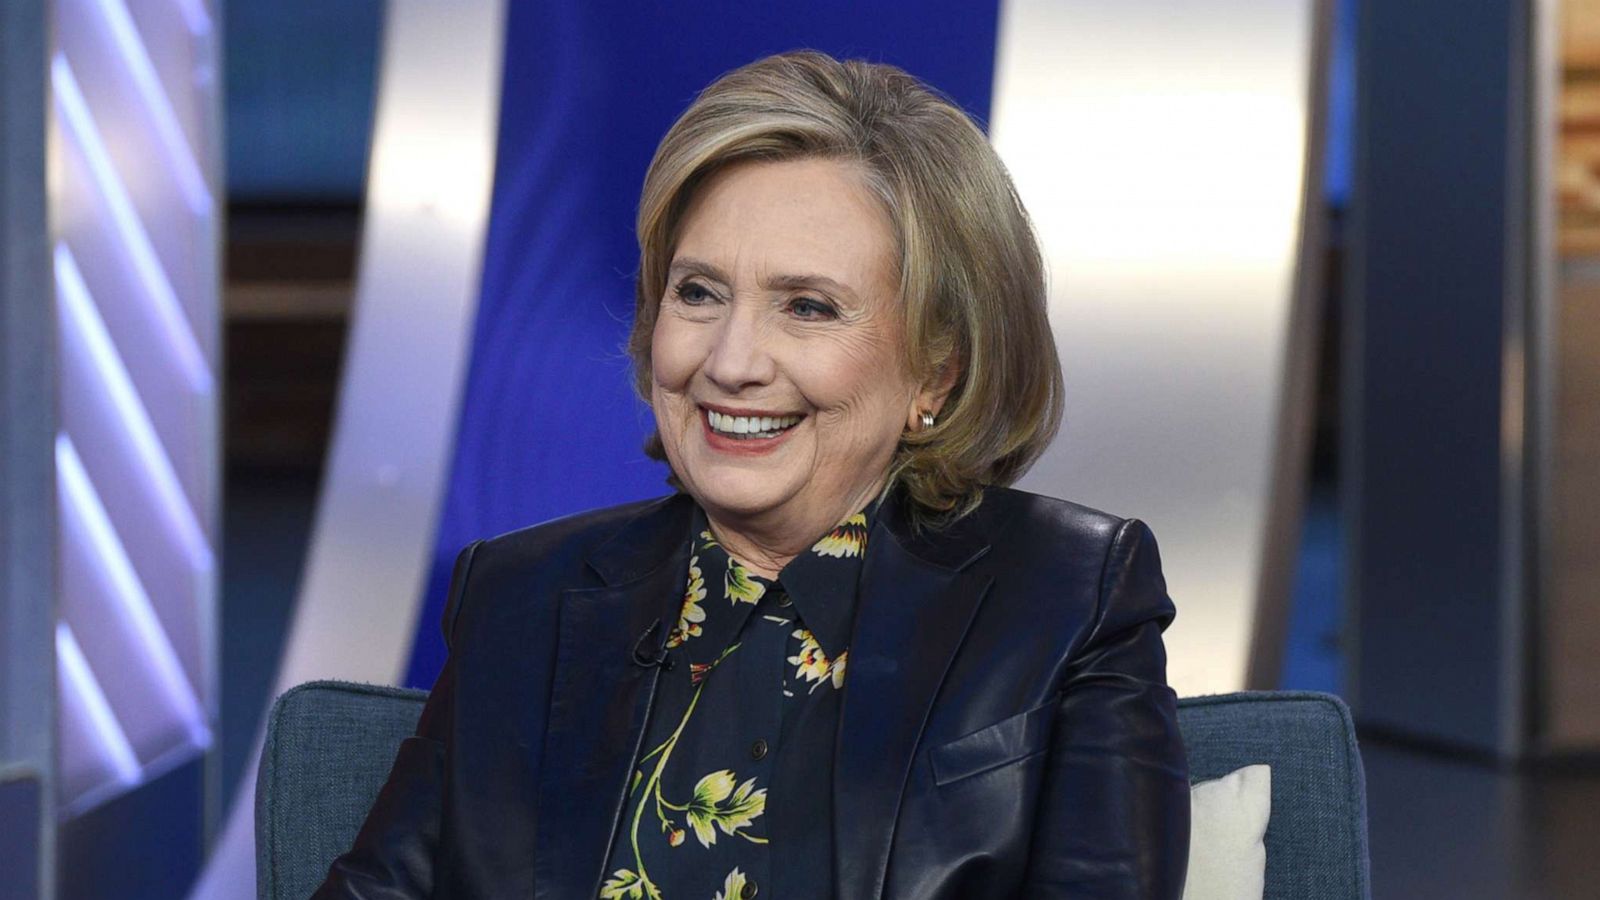 Hillary Clinton - Age, Life & Books